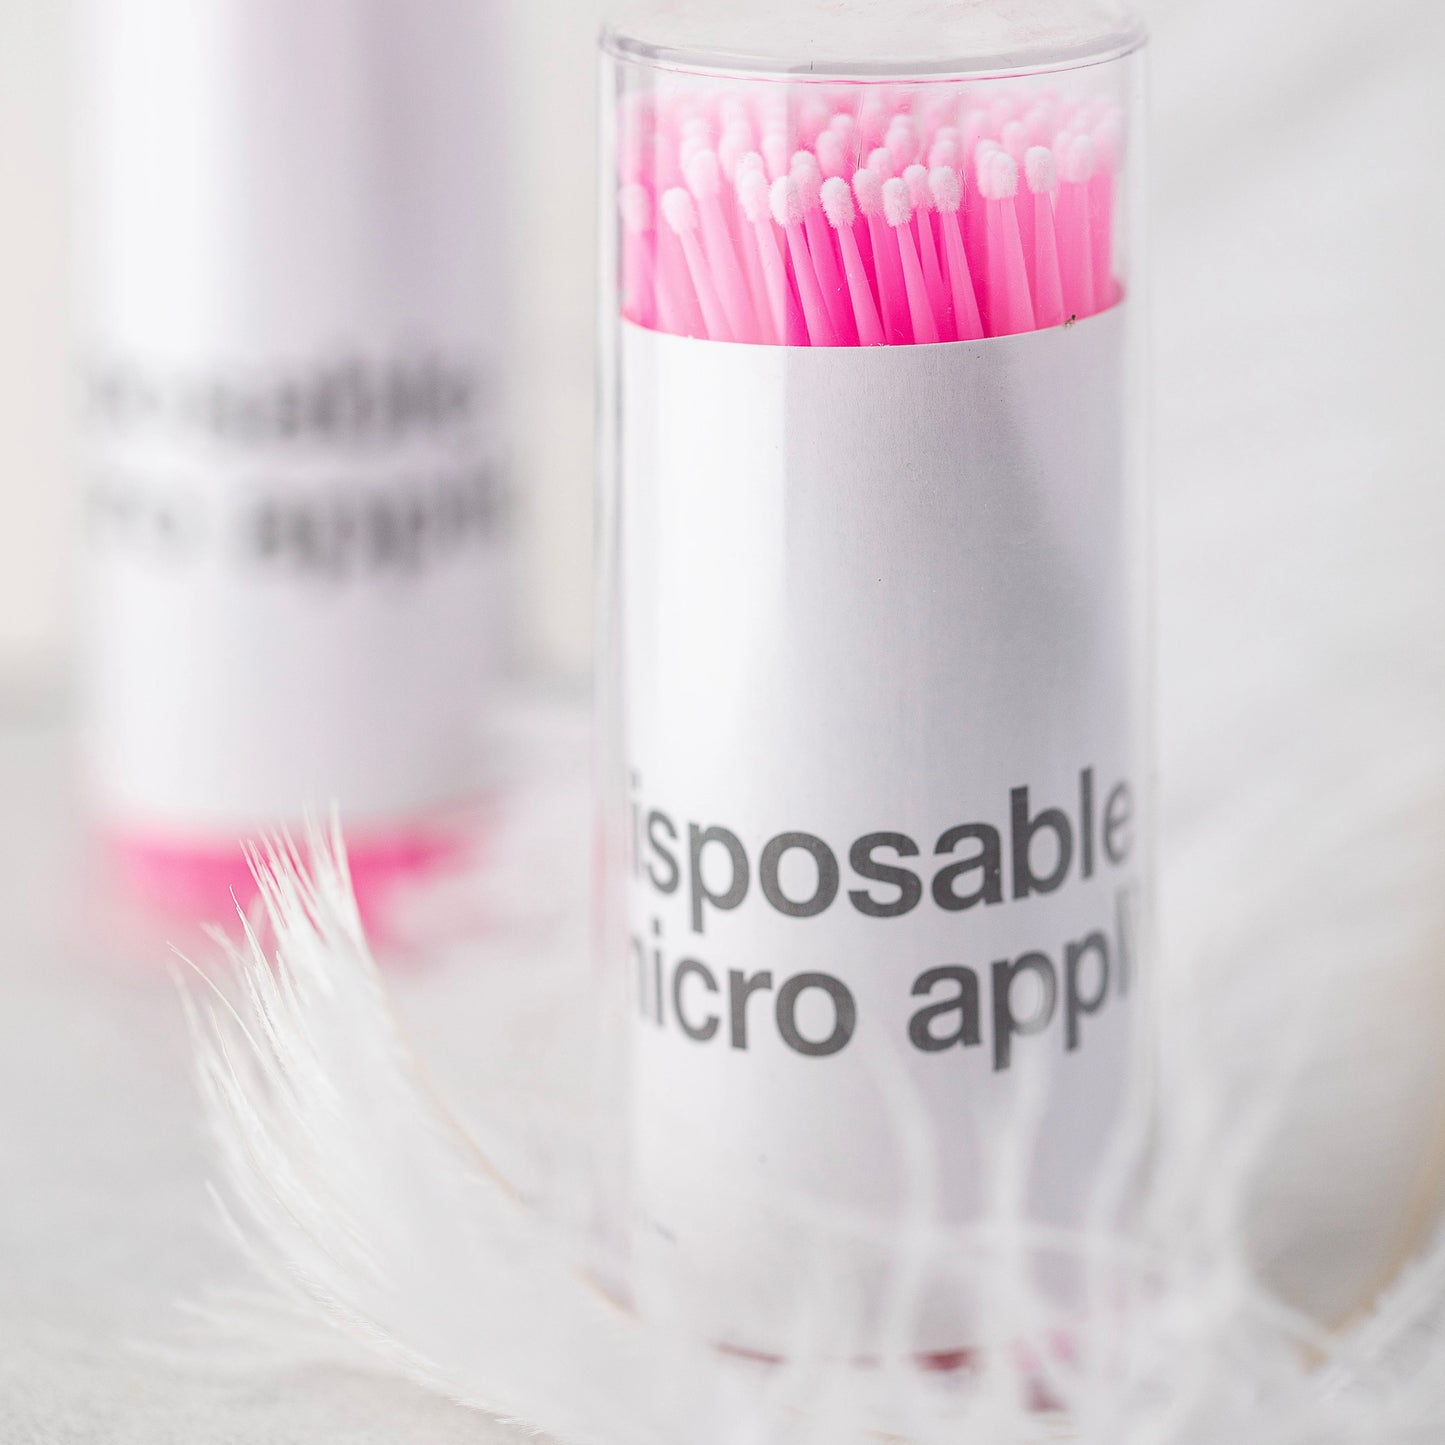 Disposable micro applicators